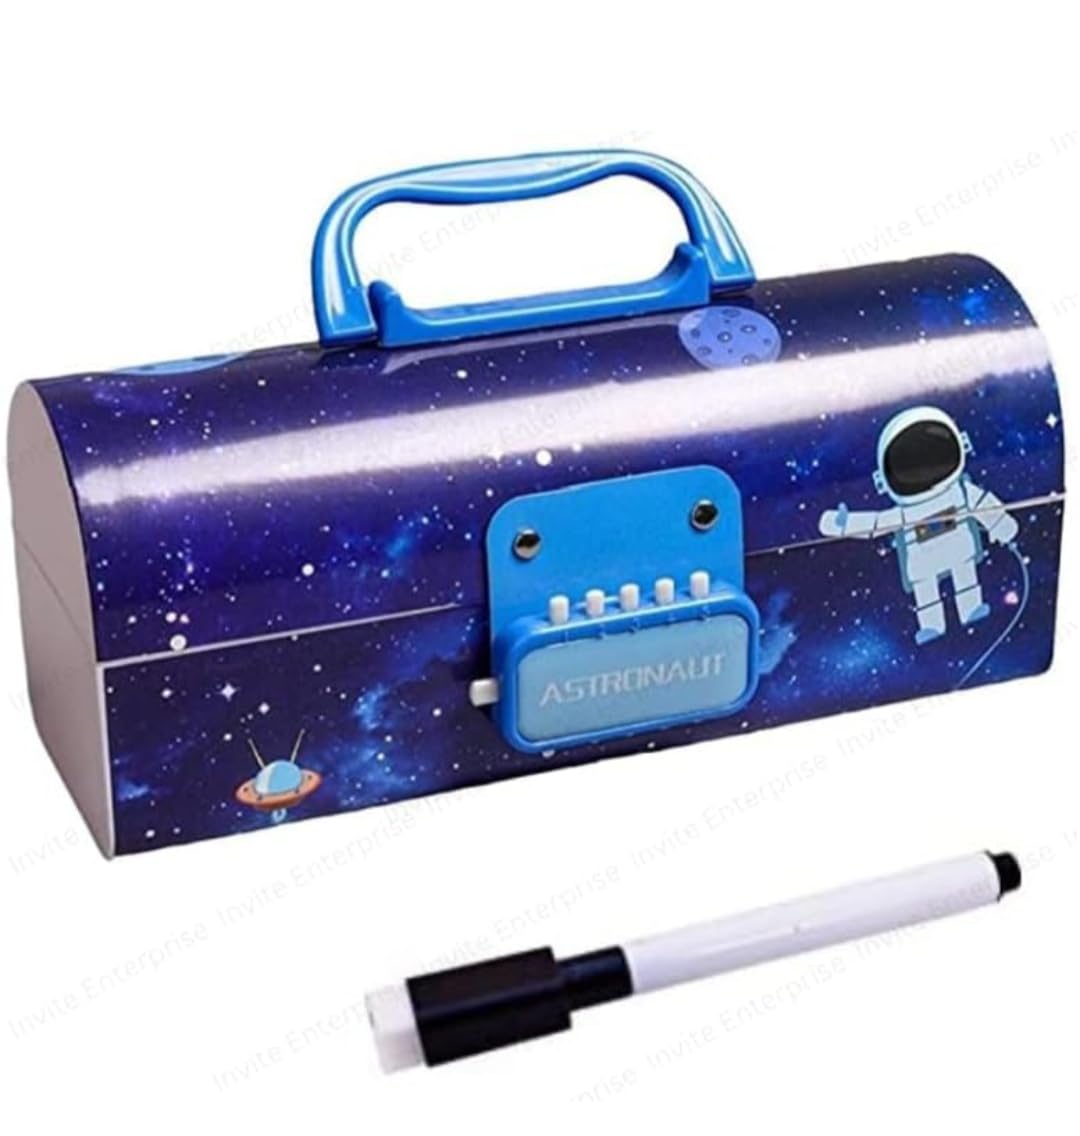 SkyShopy Suitcase style astronaut pencil box